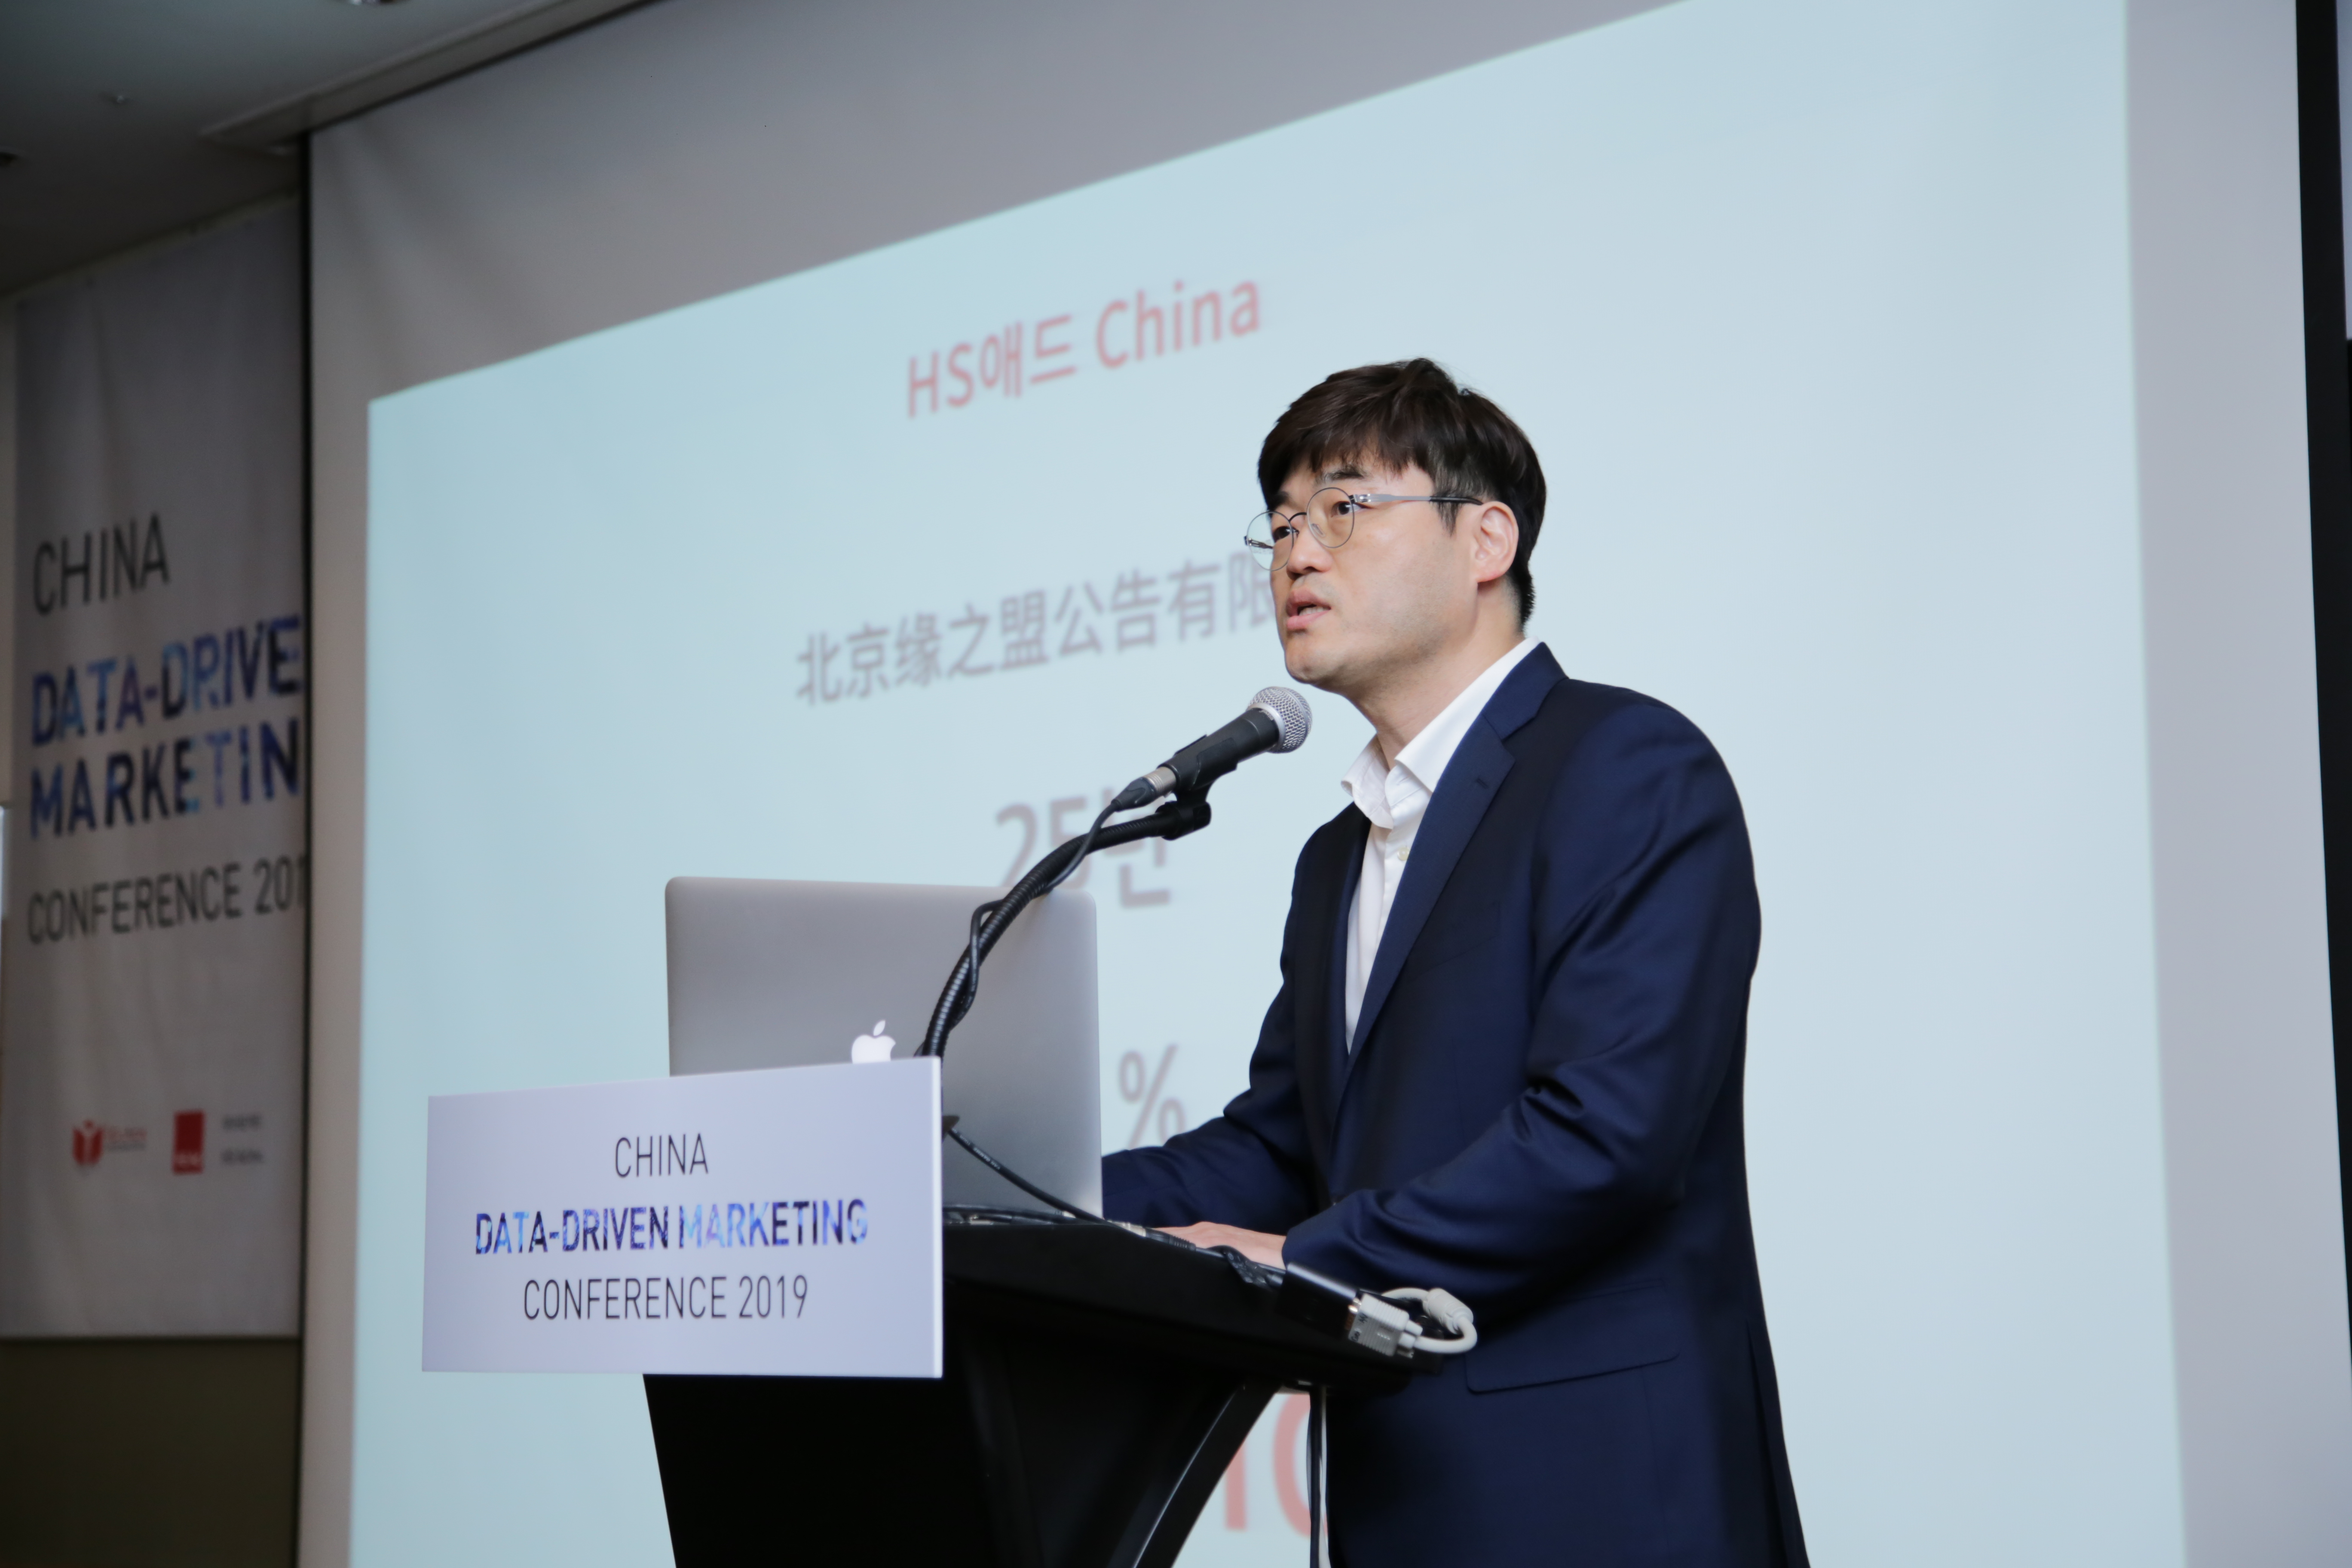 HS애드가 27일 개최한 ‘중국 데이터 드리븐 마케팅 컨퍼런스’에서 손호준 HS애드 베이징 법인장이 발표하고 있다. HS애드 제공